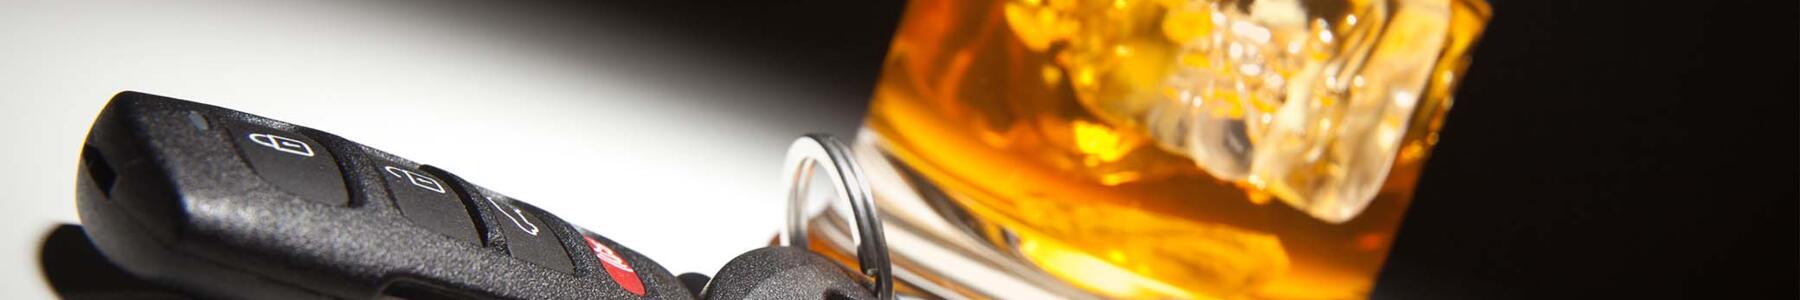 Alkohol am Steuer - Können auch Beifahrer haften?